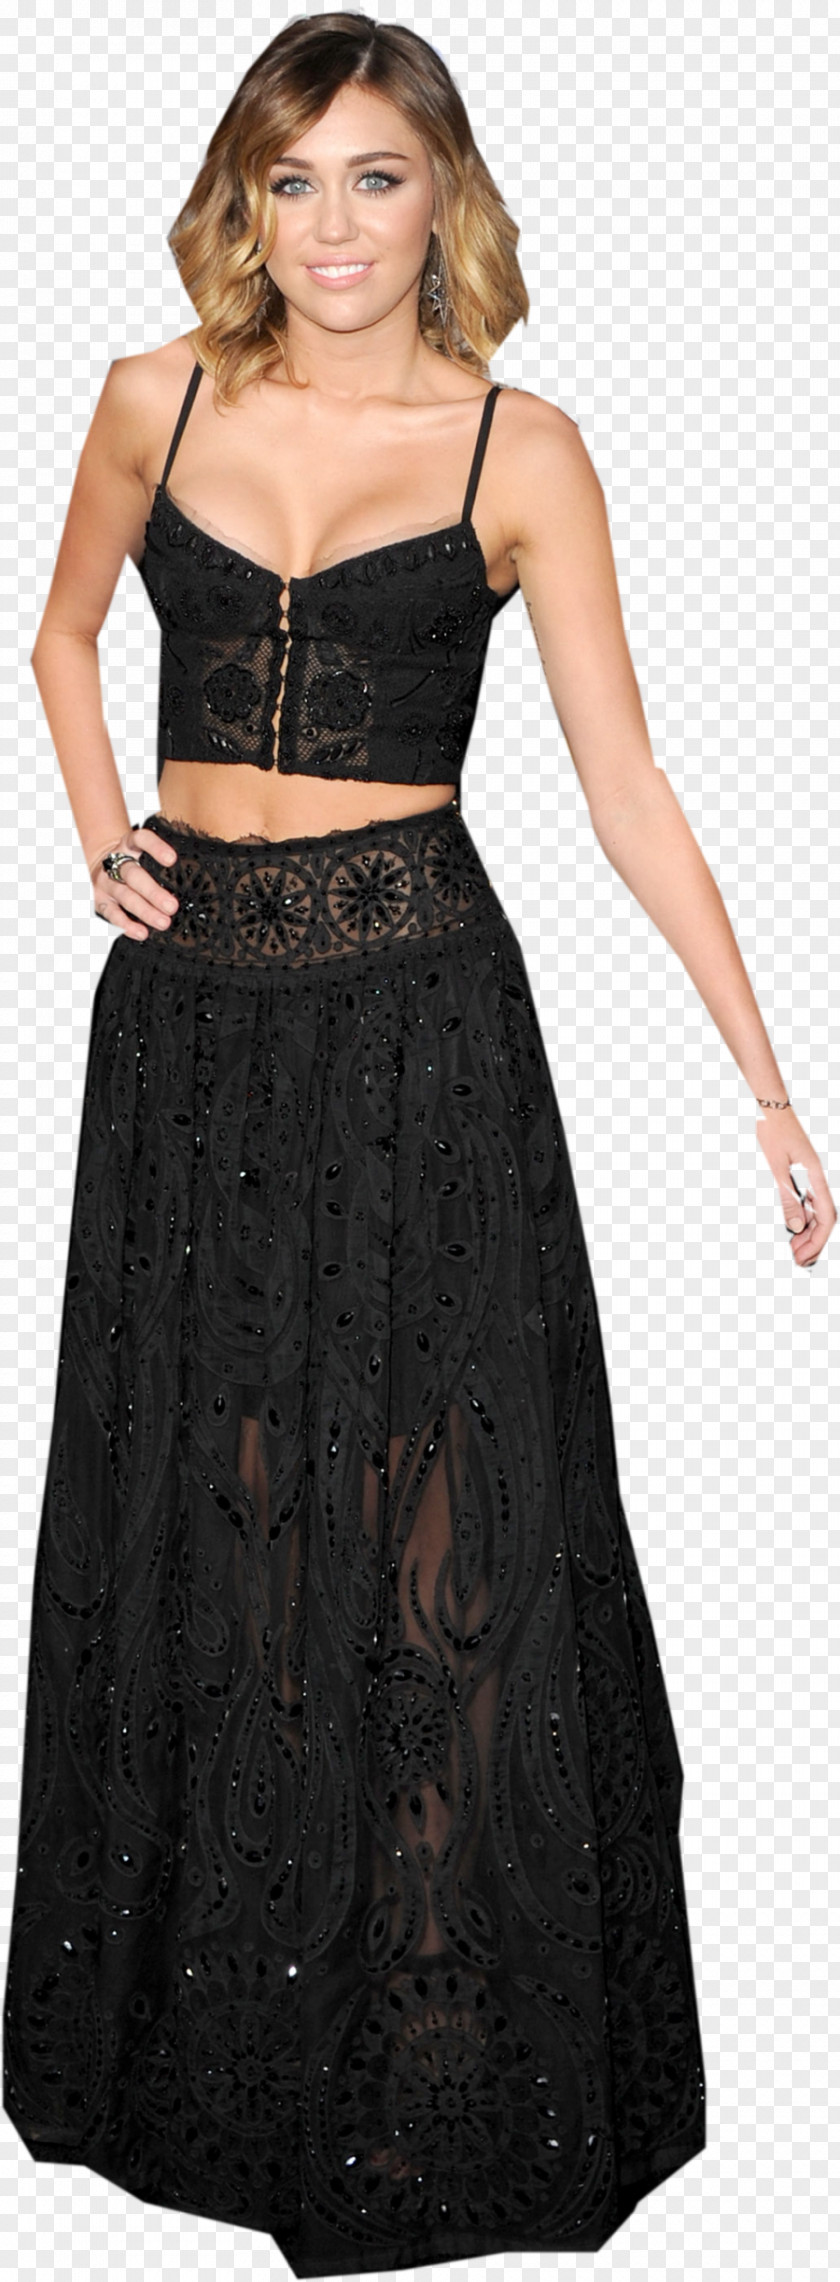 Dress Little Black Shoulder Party Gown PNG